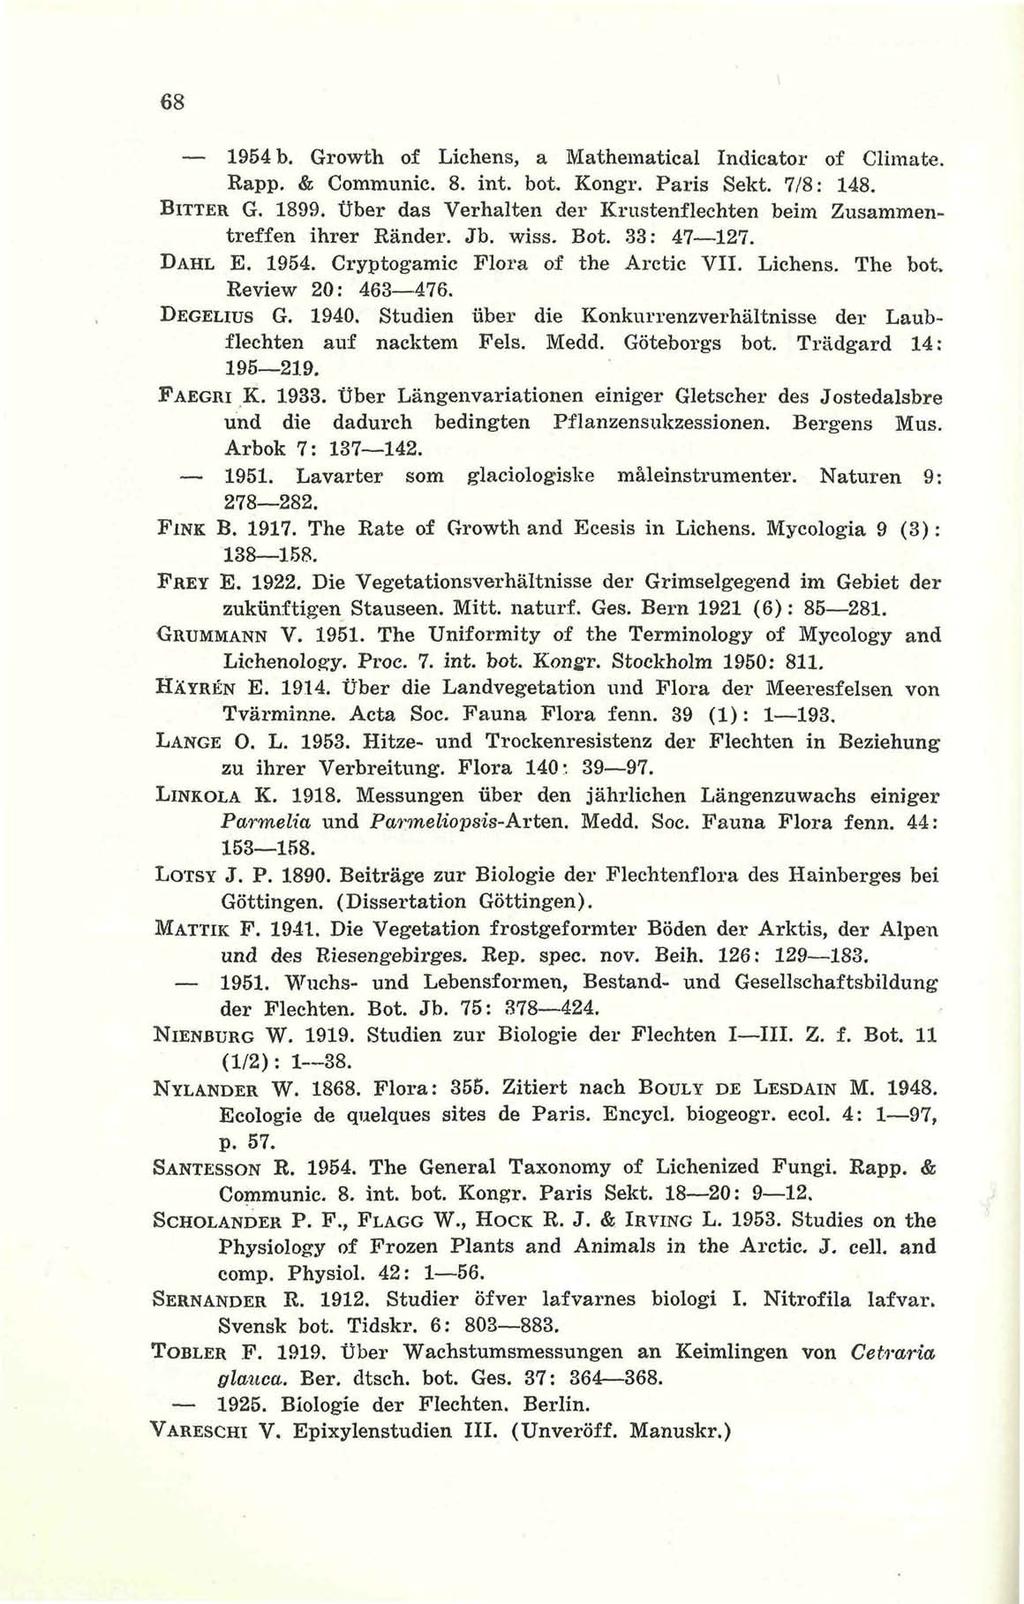 m 1954 b. Growth of Lichens, a Mathematical Indicator of Climate. Rapp. & Communic. 8. int. bot. Kongr. Paris Sekt. 7/8: 148. BITTER G. 1899.